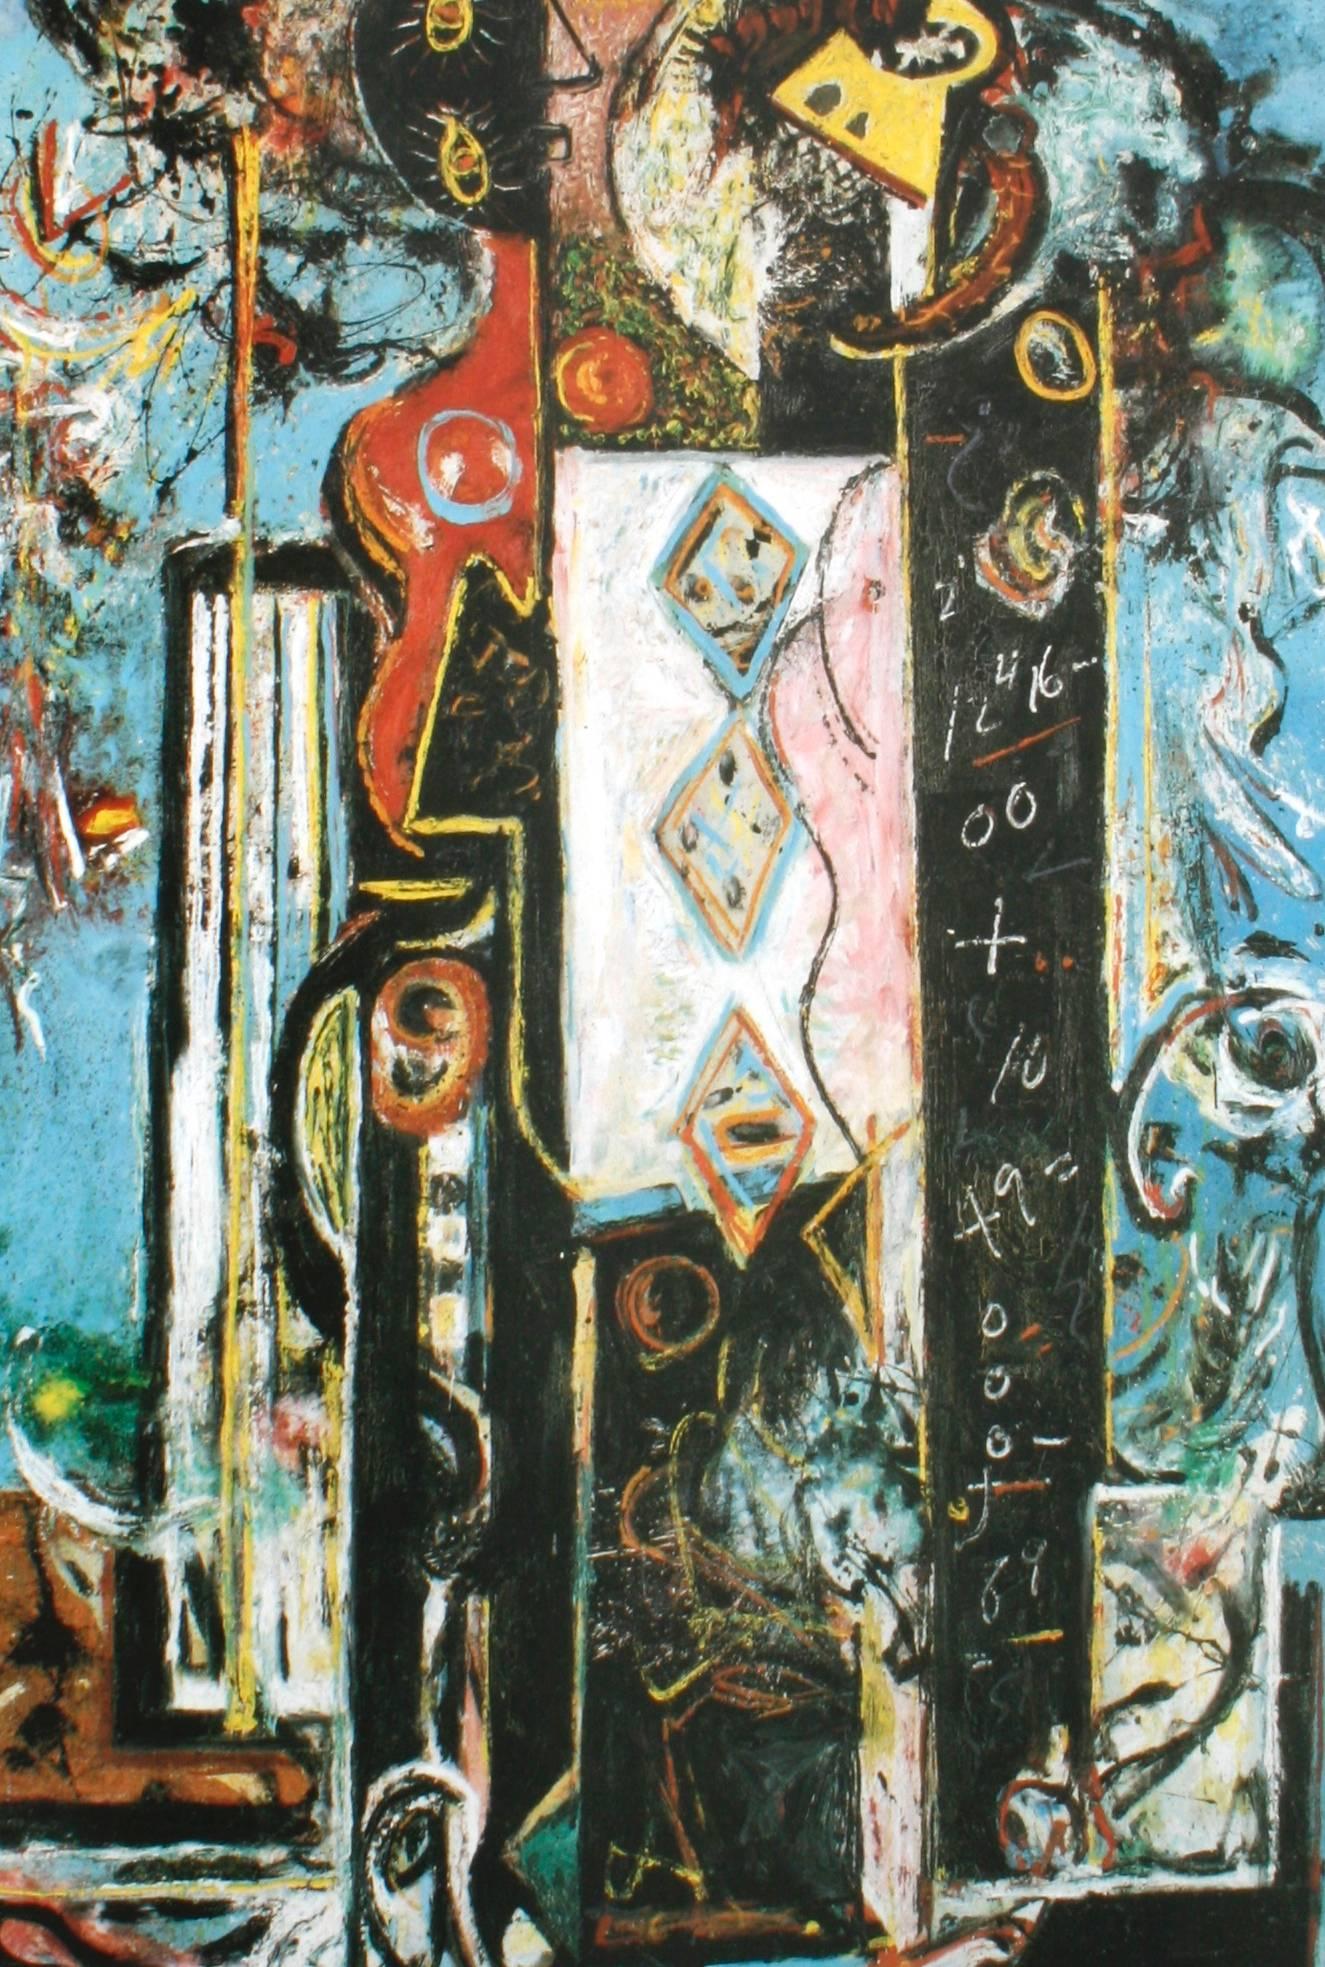 20th Century Jackson Pollock by Kirk Varnedoe and Pepe Karmel, First Edition